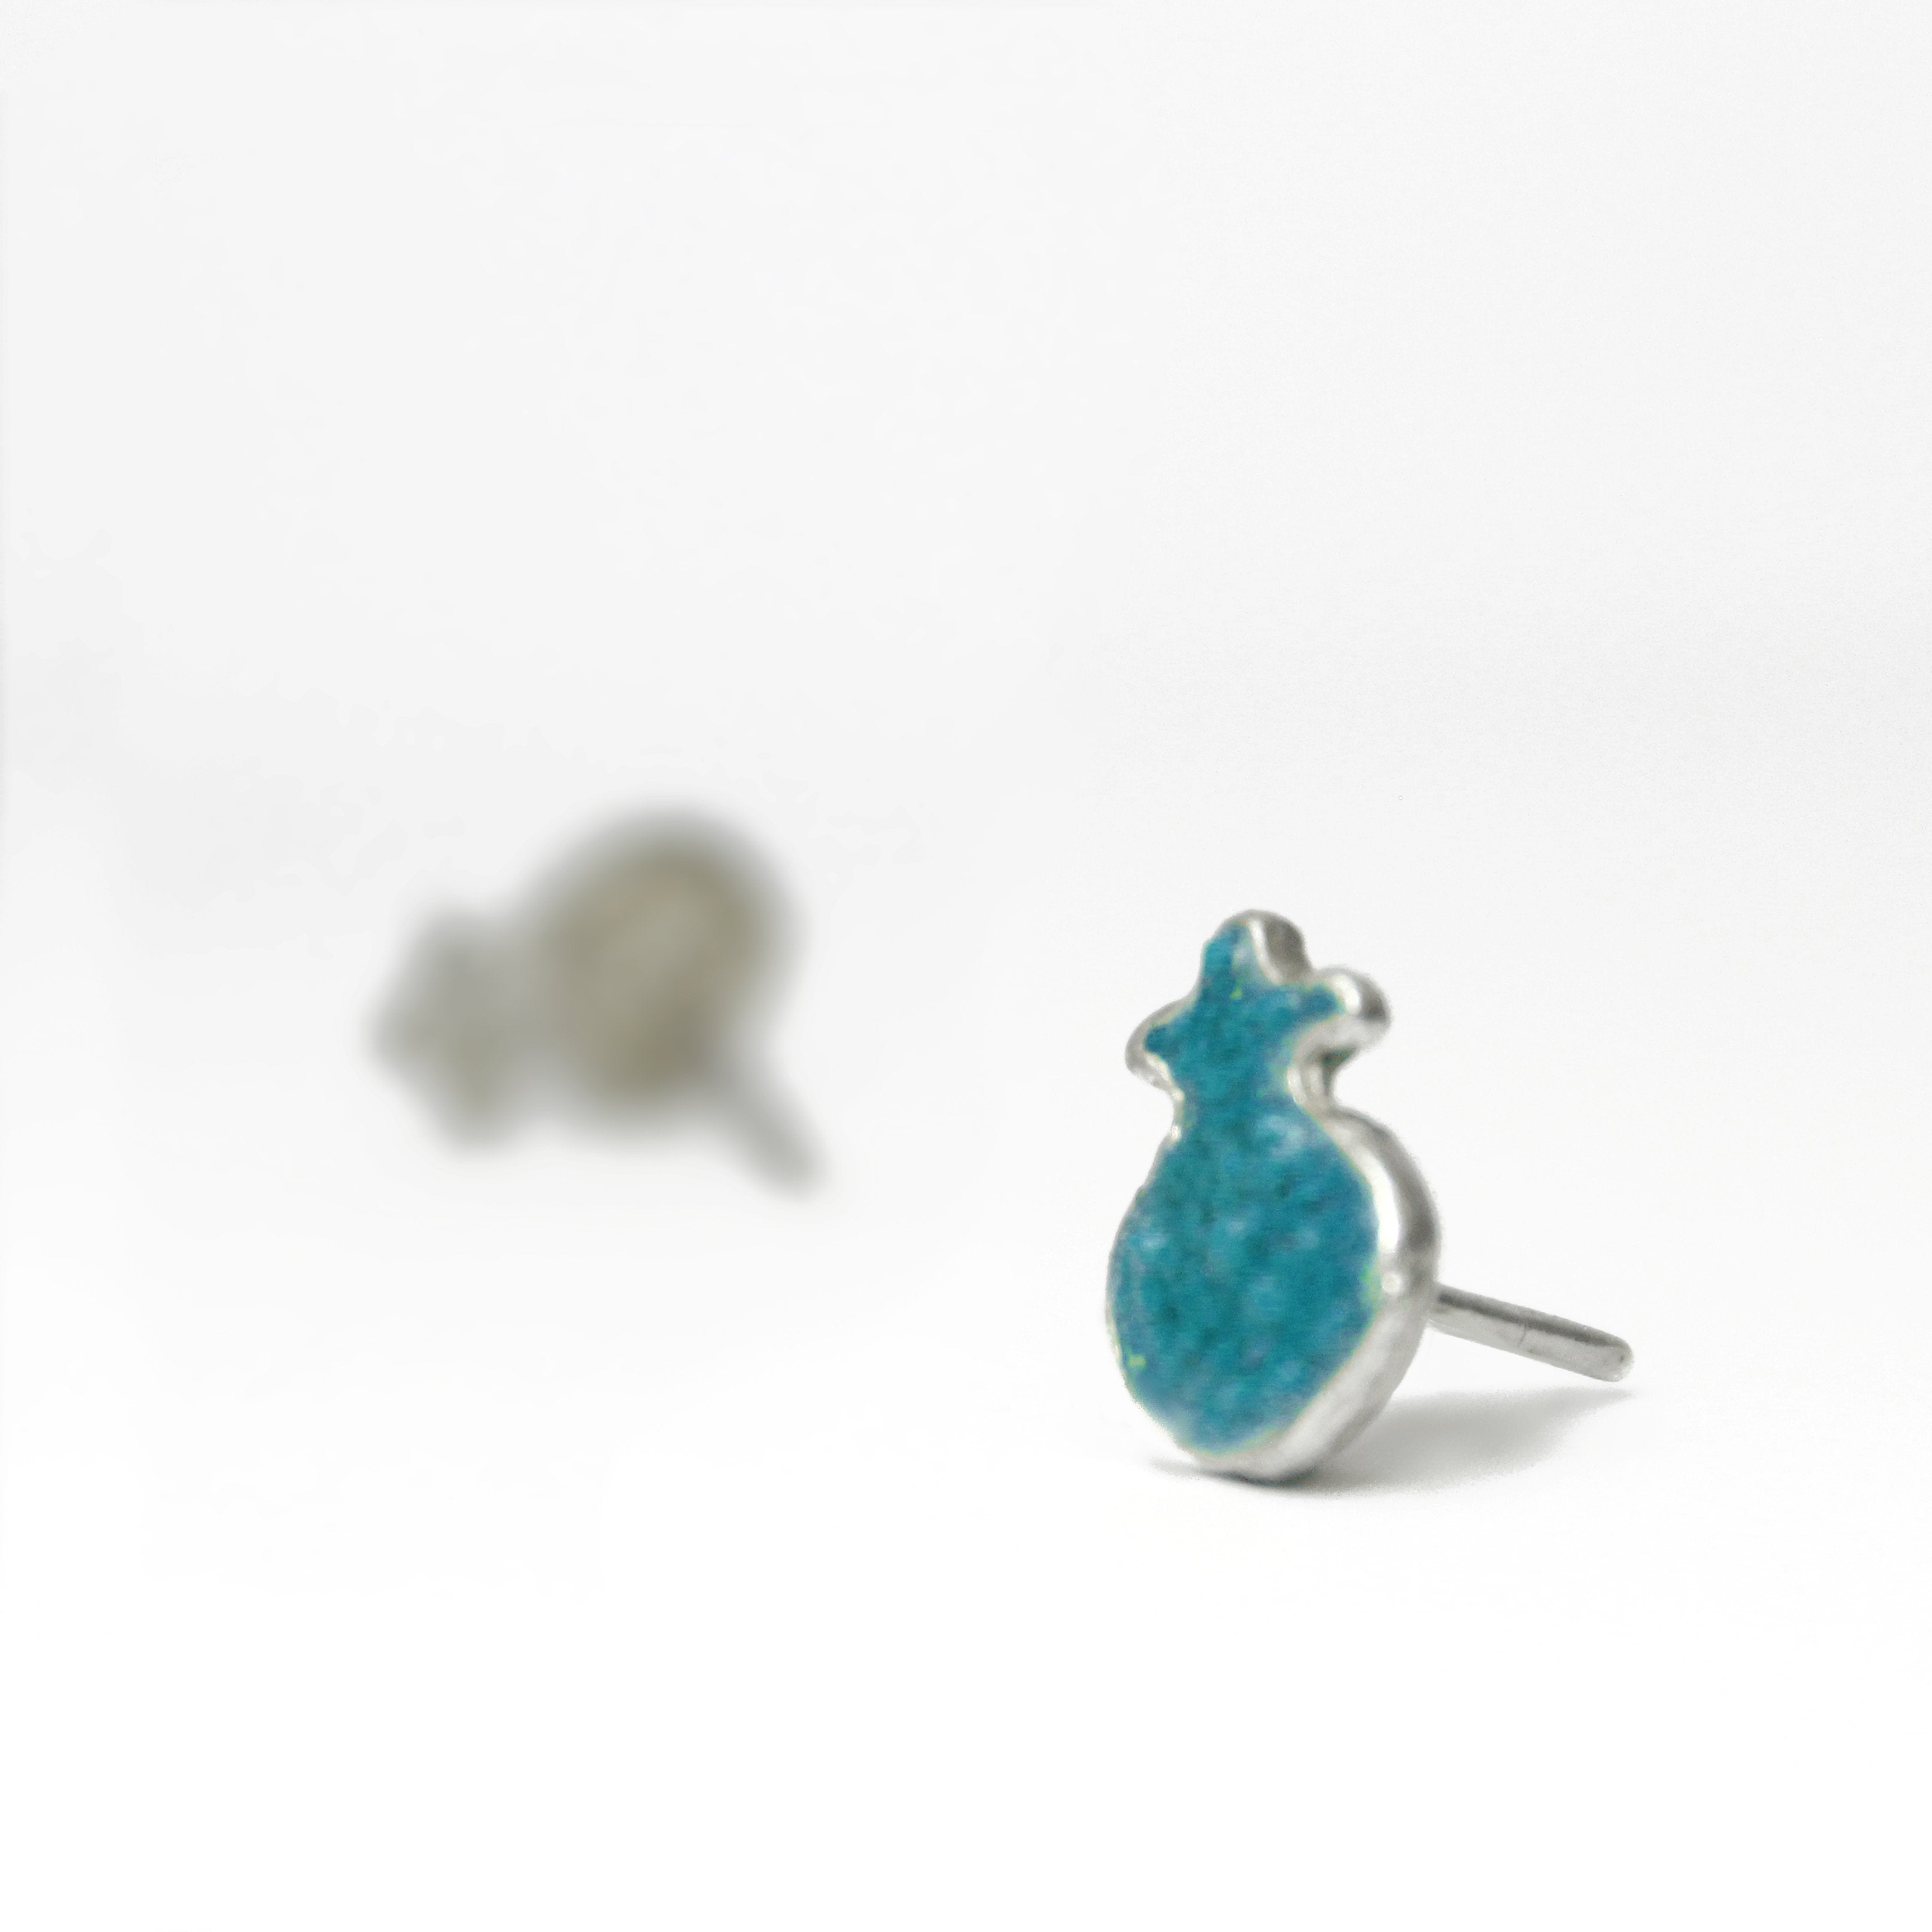 Turquoise Pomegranate Silver & Stones Pierce Earrings - Shulamit Kanter